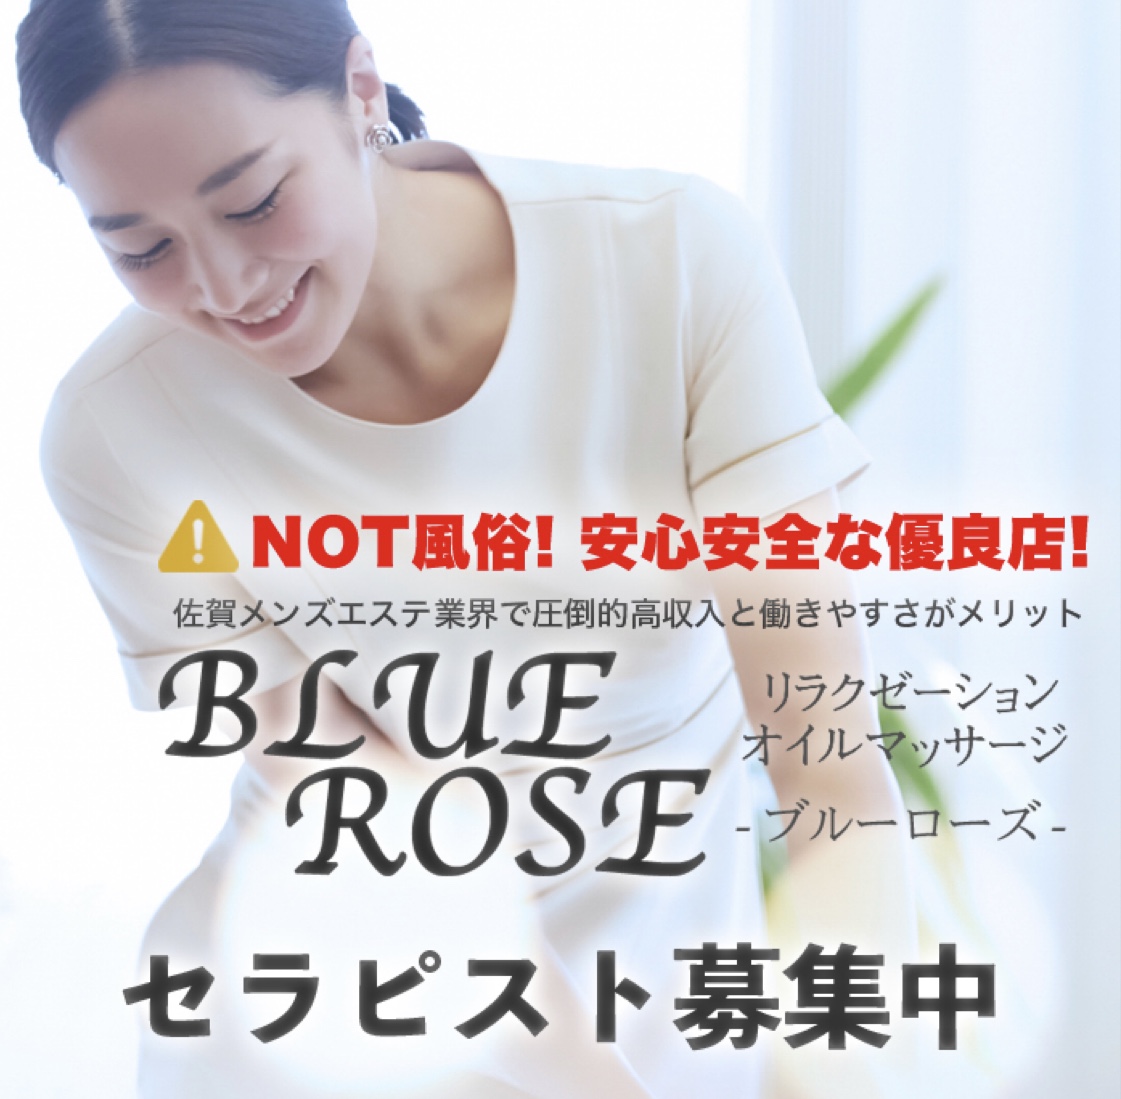 BLUE ROSE -ブルーローズ-求人情報|九州･沖縄アロマエステ案内所